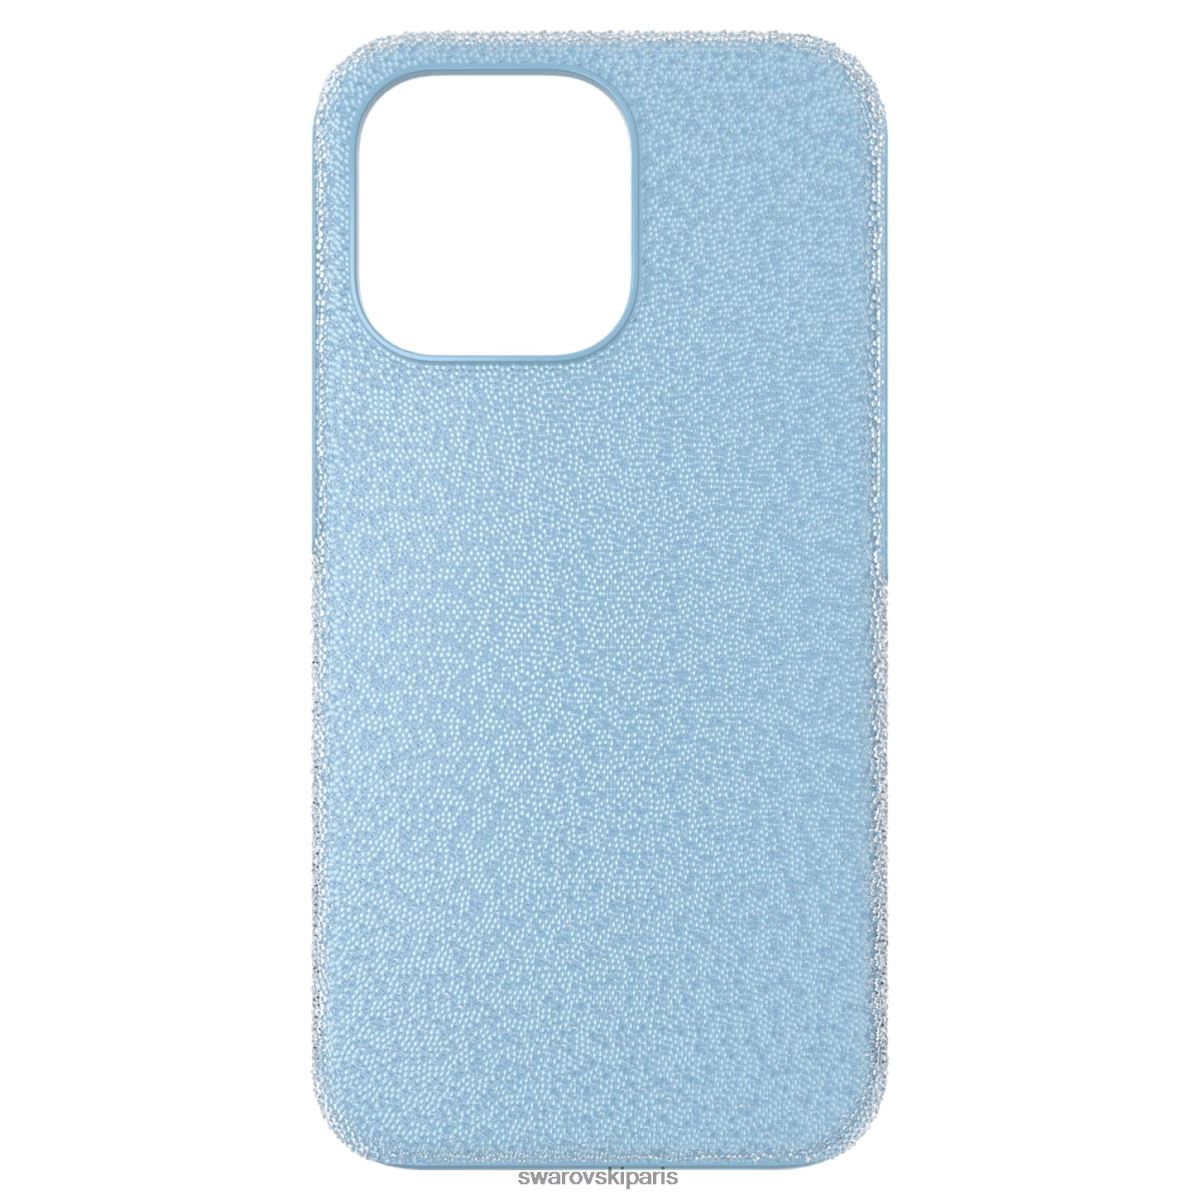 accessoires Swarovski coque haute pour smartphone ii bleu RZD0XJ1326